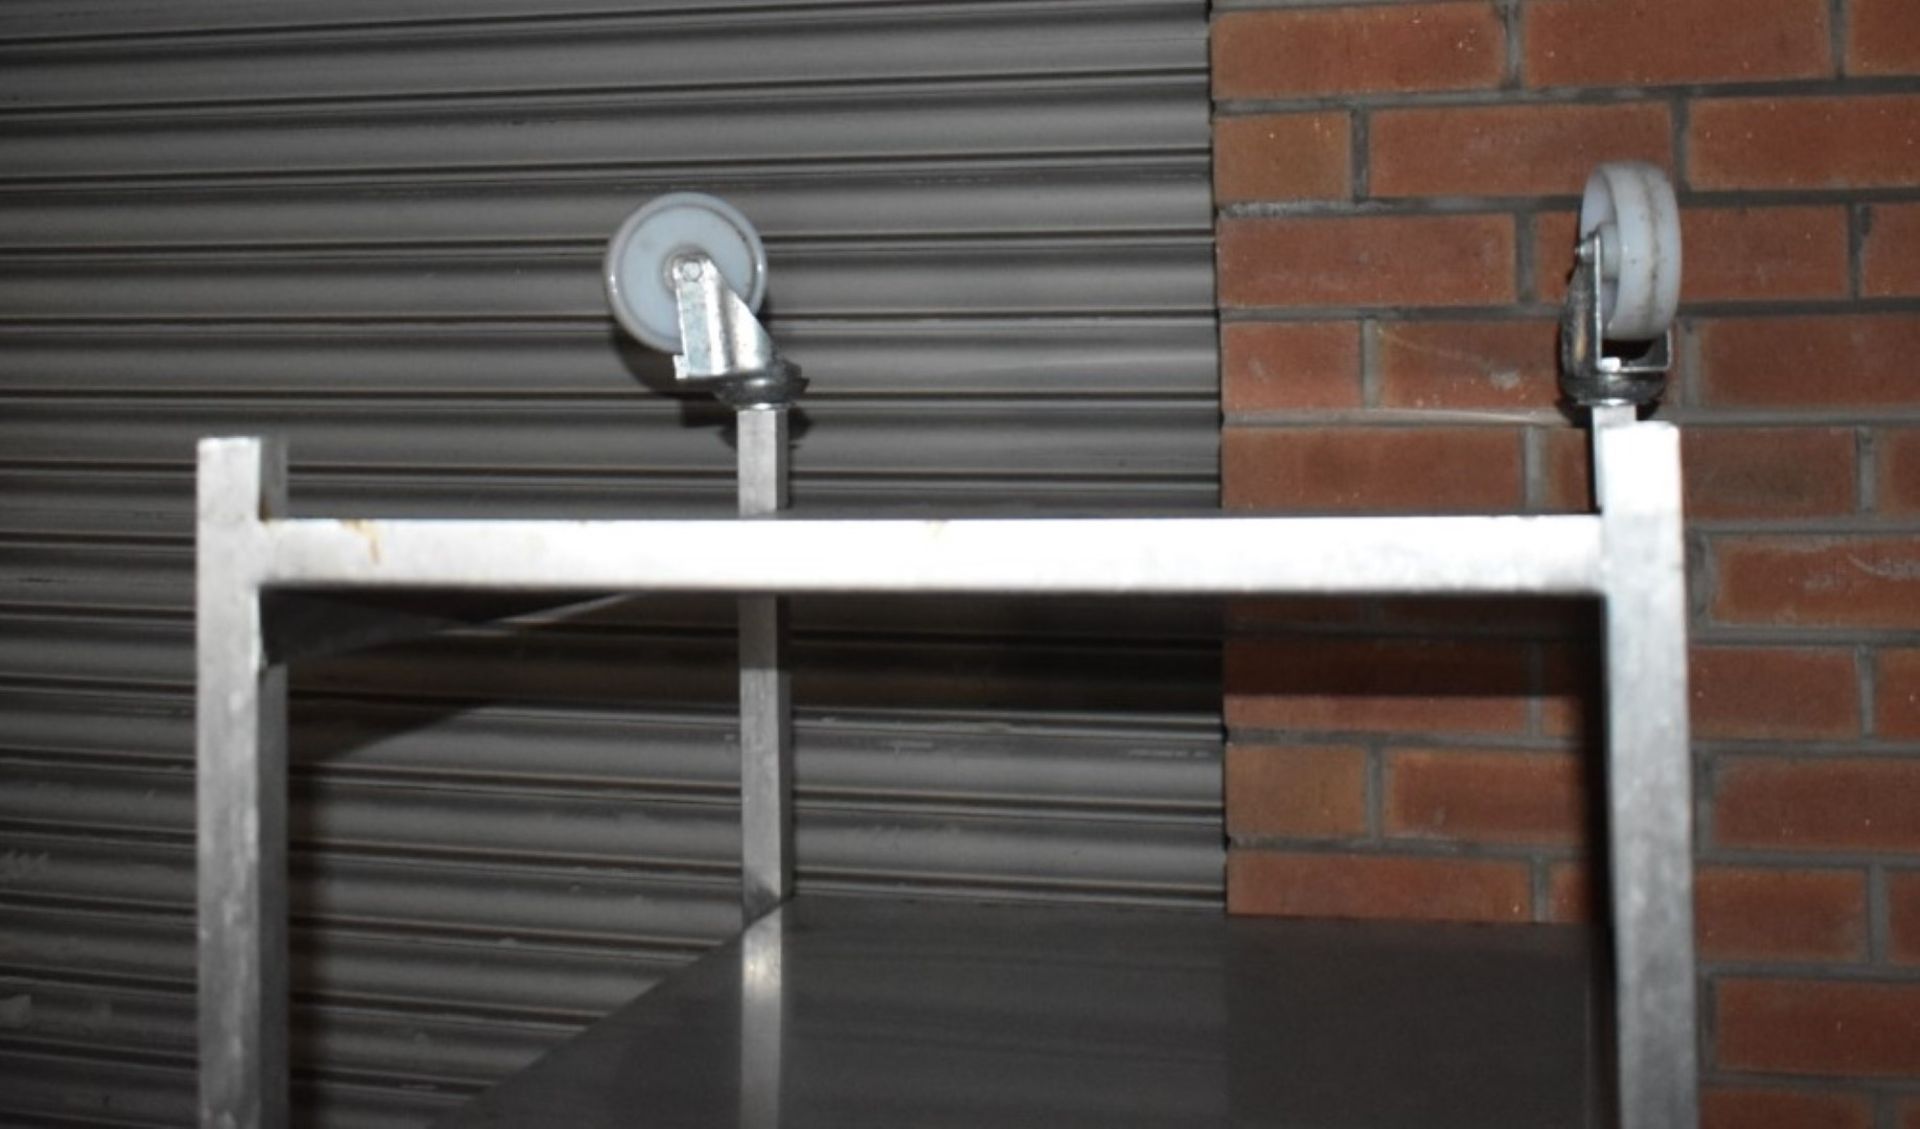 1 x Stainless Steel Commercial Kitchen 7 Tier Shelf Unit on Castors - Dimensions: H176 x W53 x D64 - Image 2 of 4